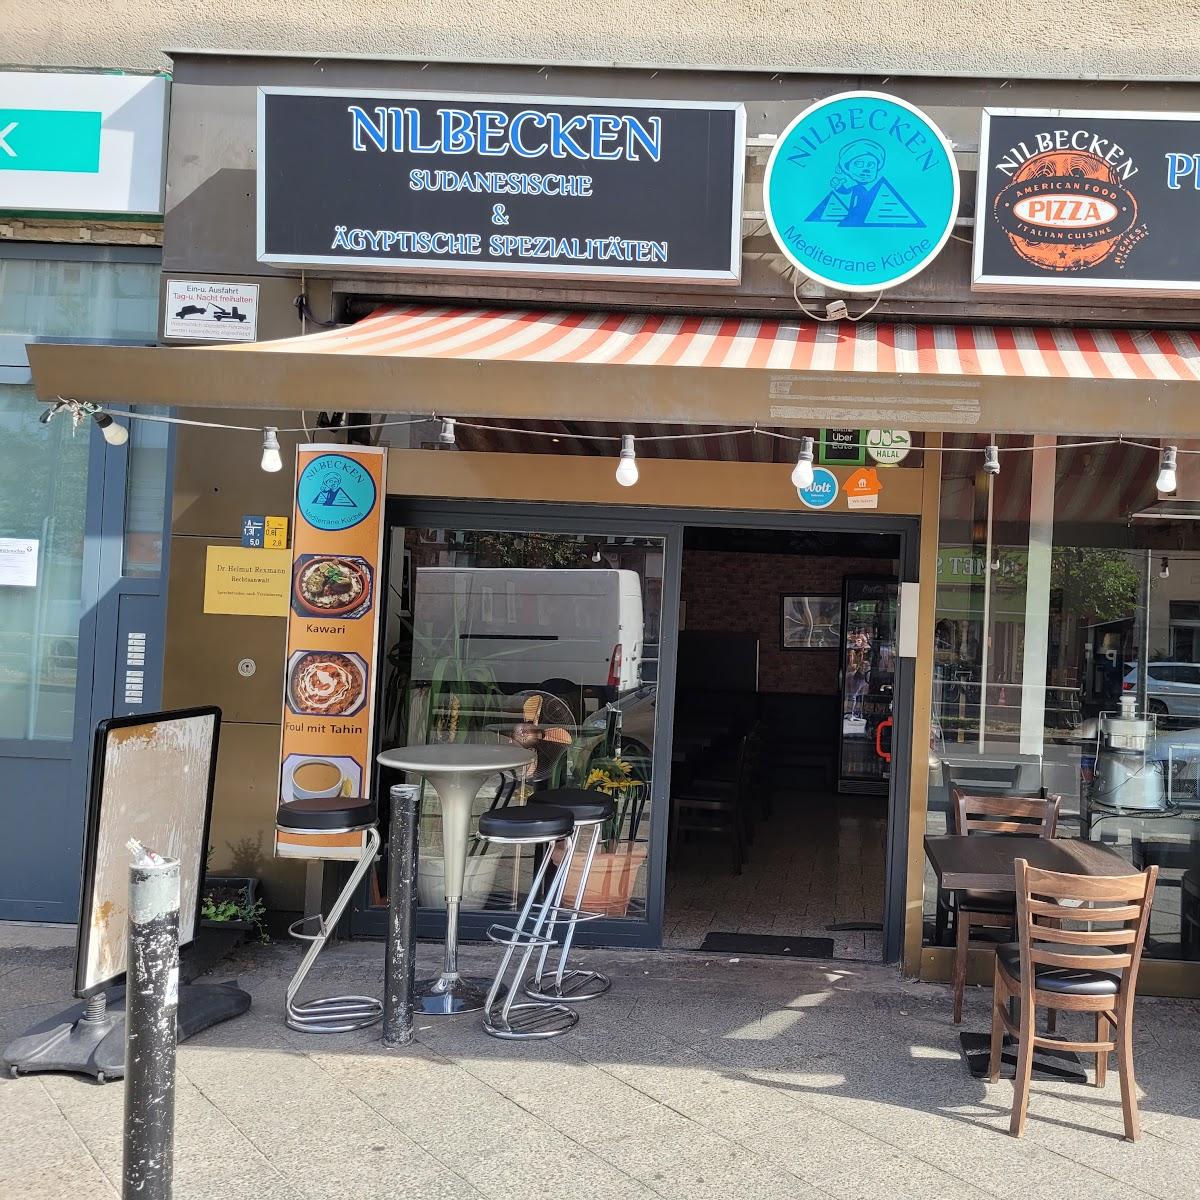 Restaurant "Nilbecken" in Berlin